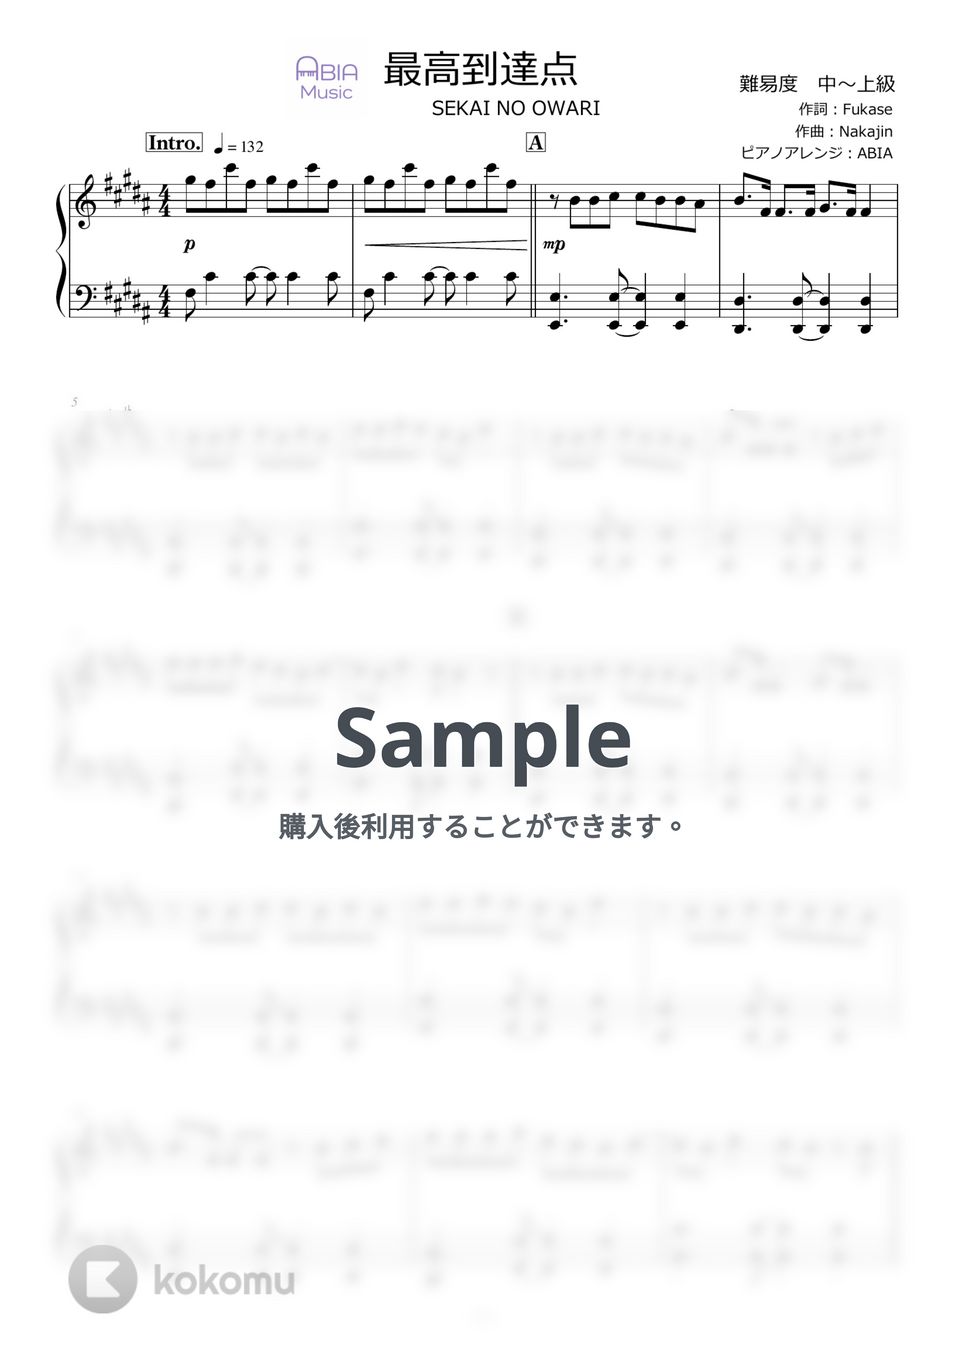 SEKAI NO OWARI - 最高到達点 by ABIA Music